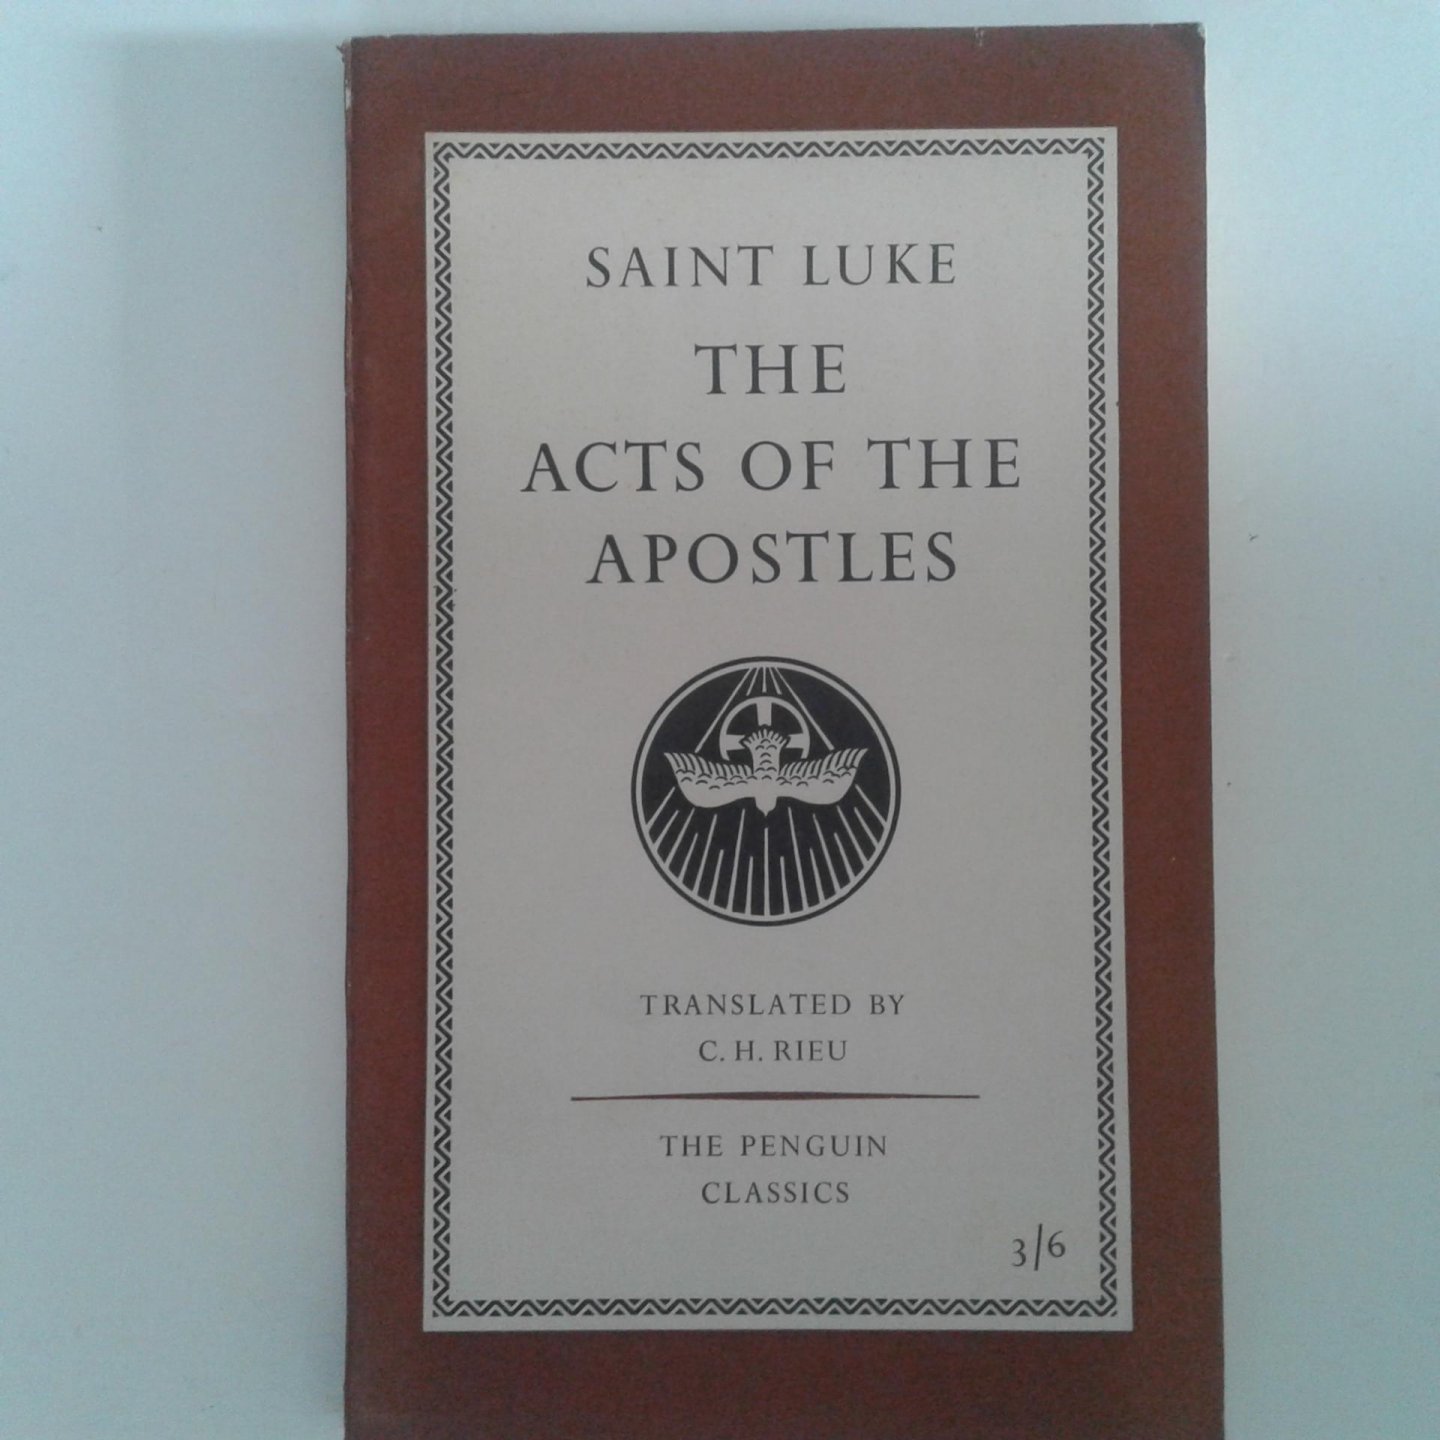 Saint Luke - The Acts of the Apostles